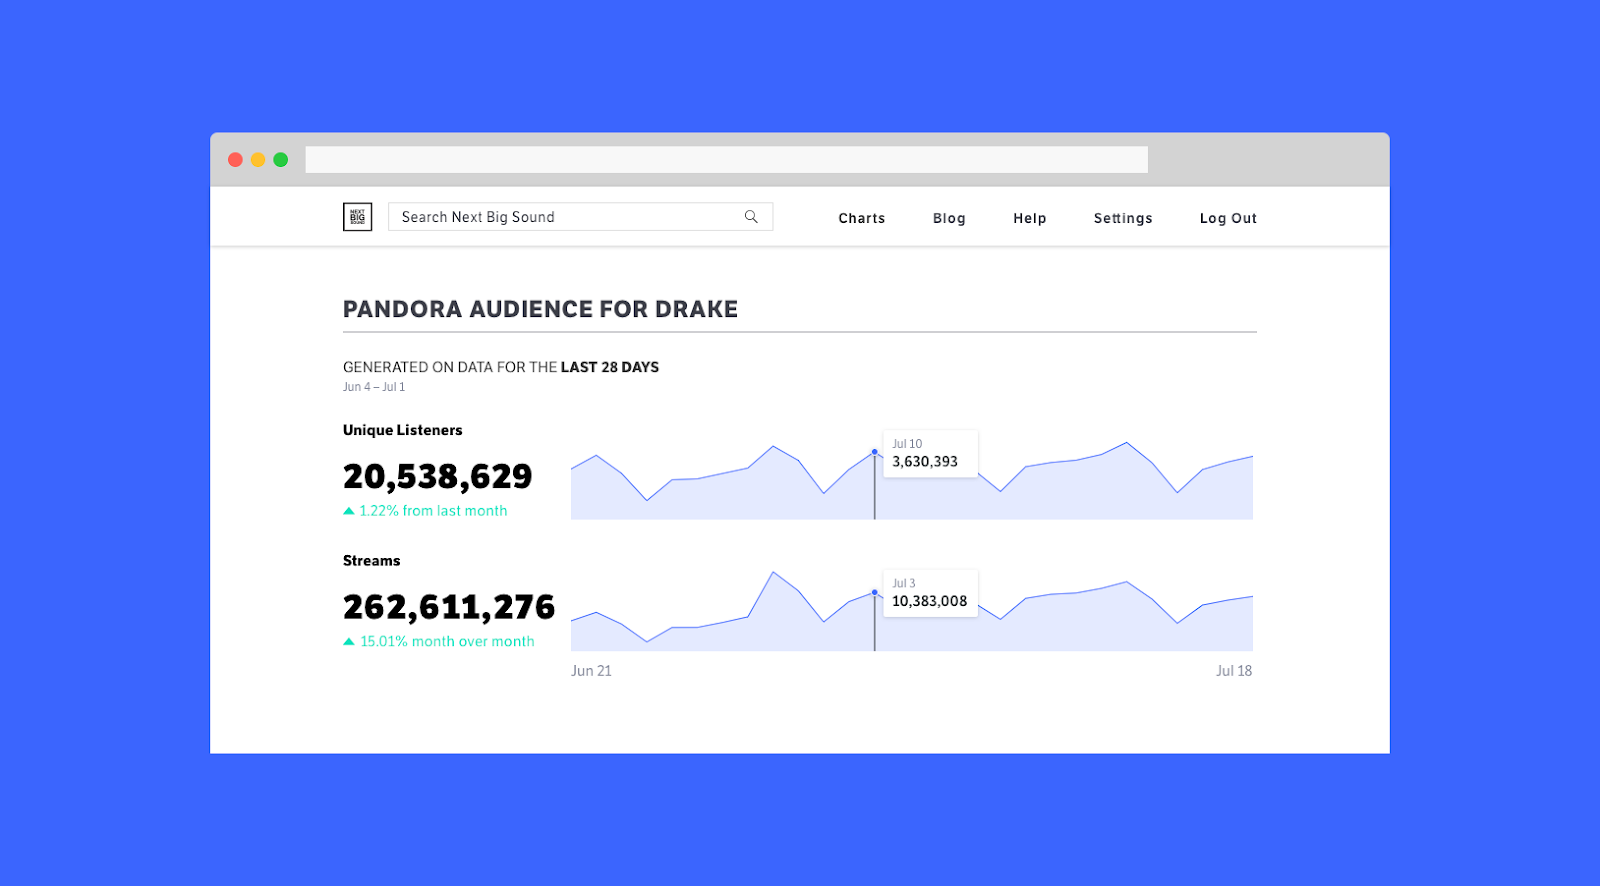 Pandora add stream counts for artists on Next Big Sound